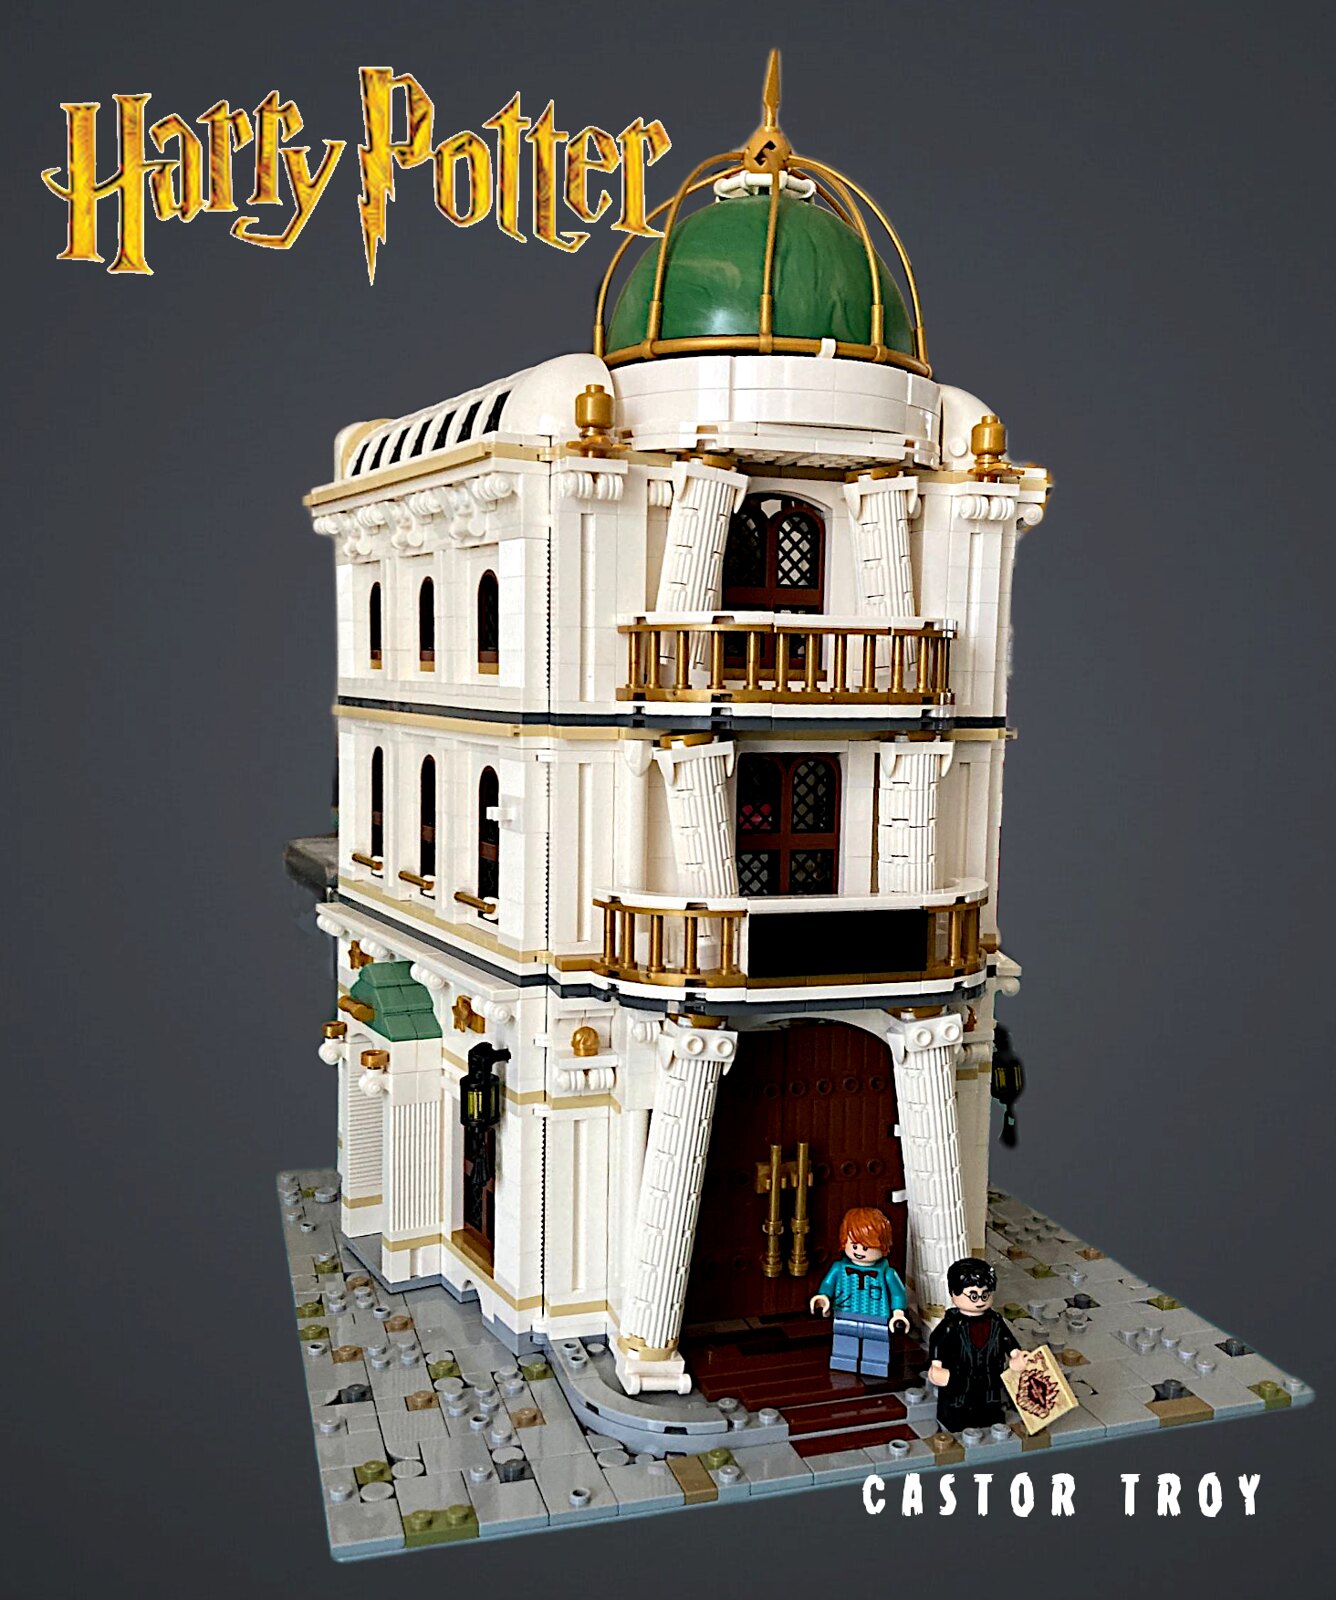 Harry Potter - Gringotts bank